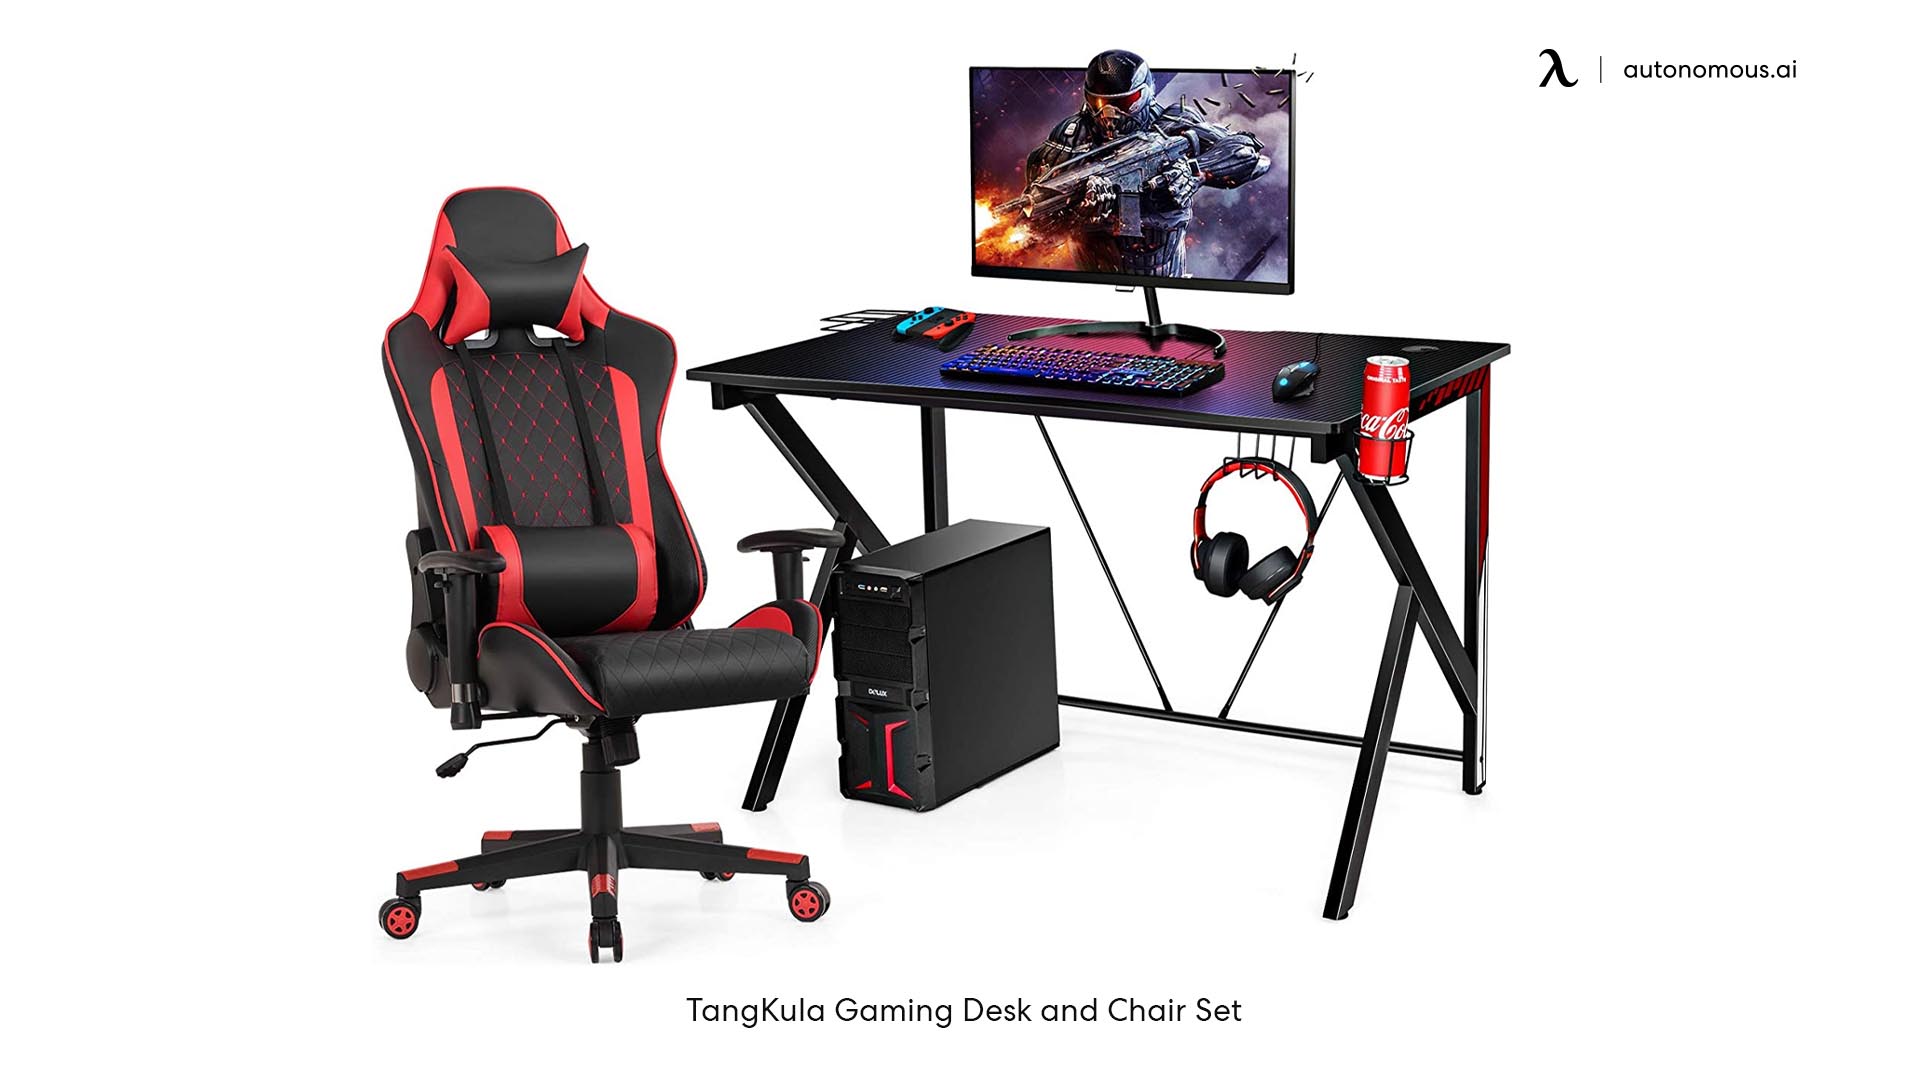 TangKula Gaming Desk and Chair Set